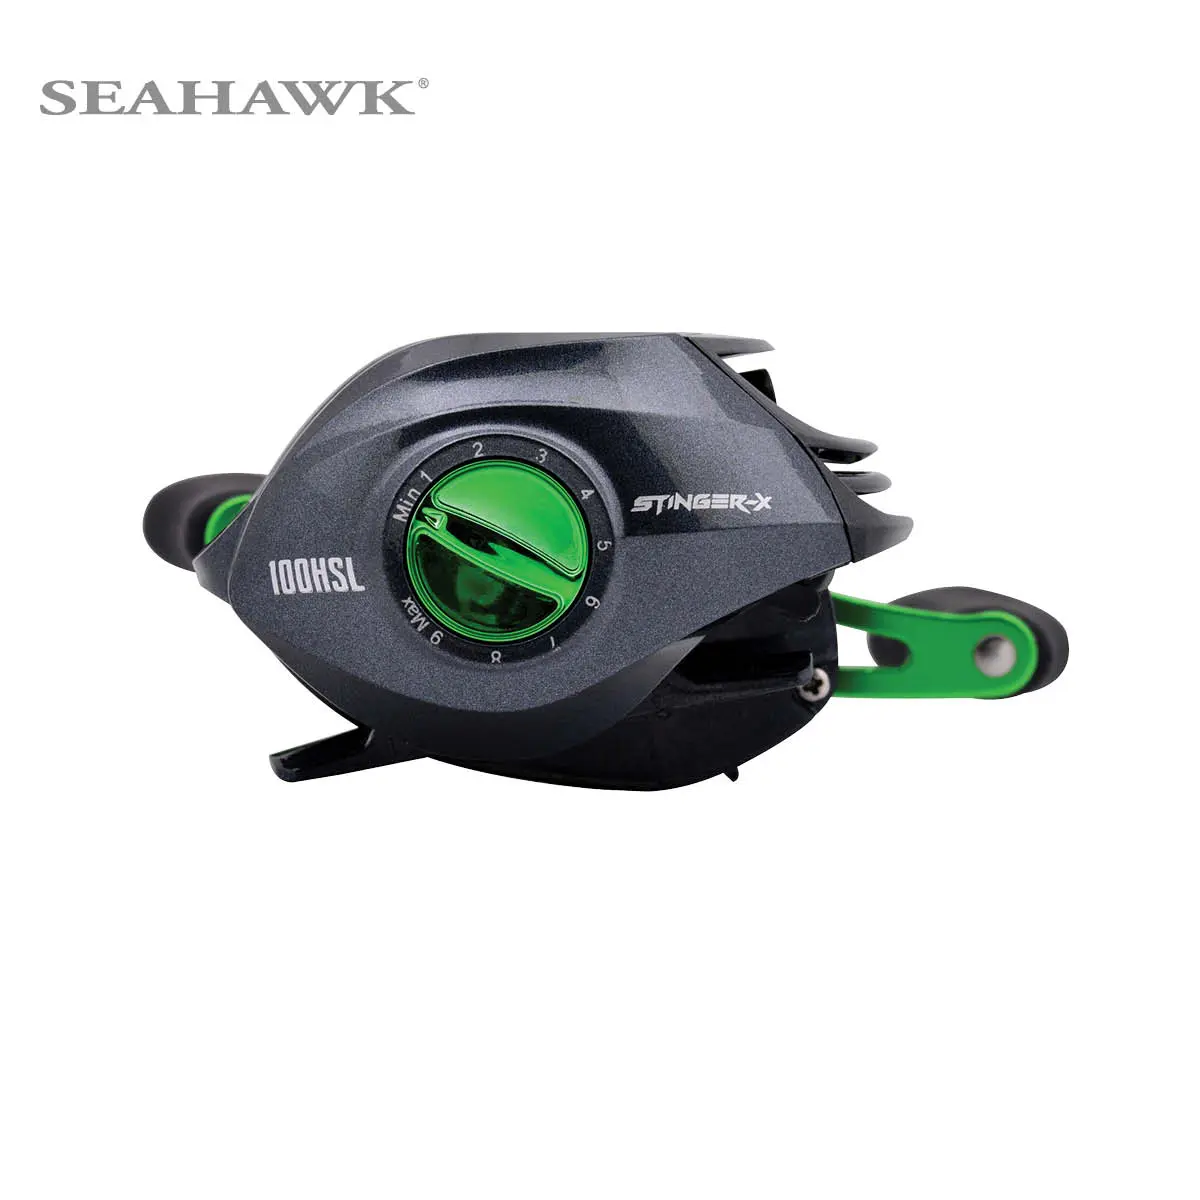 seahawk-stinger-x-06